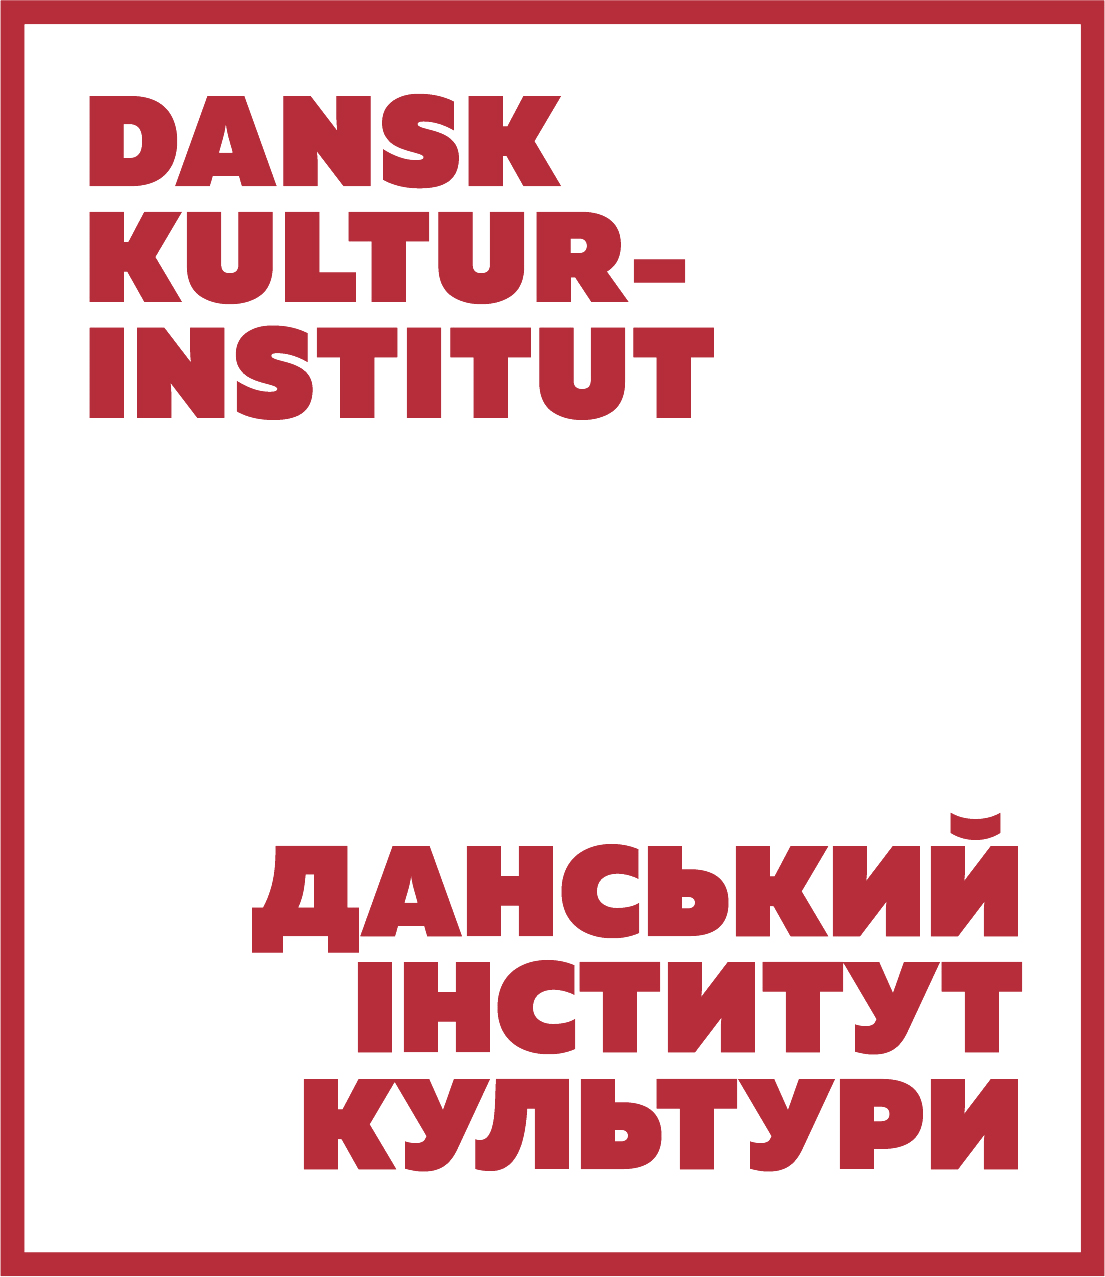 Danish Cultural Institute in Estonia, Latvia and Lithuania